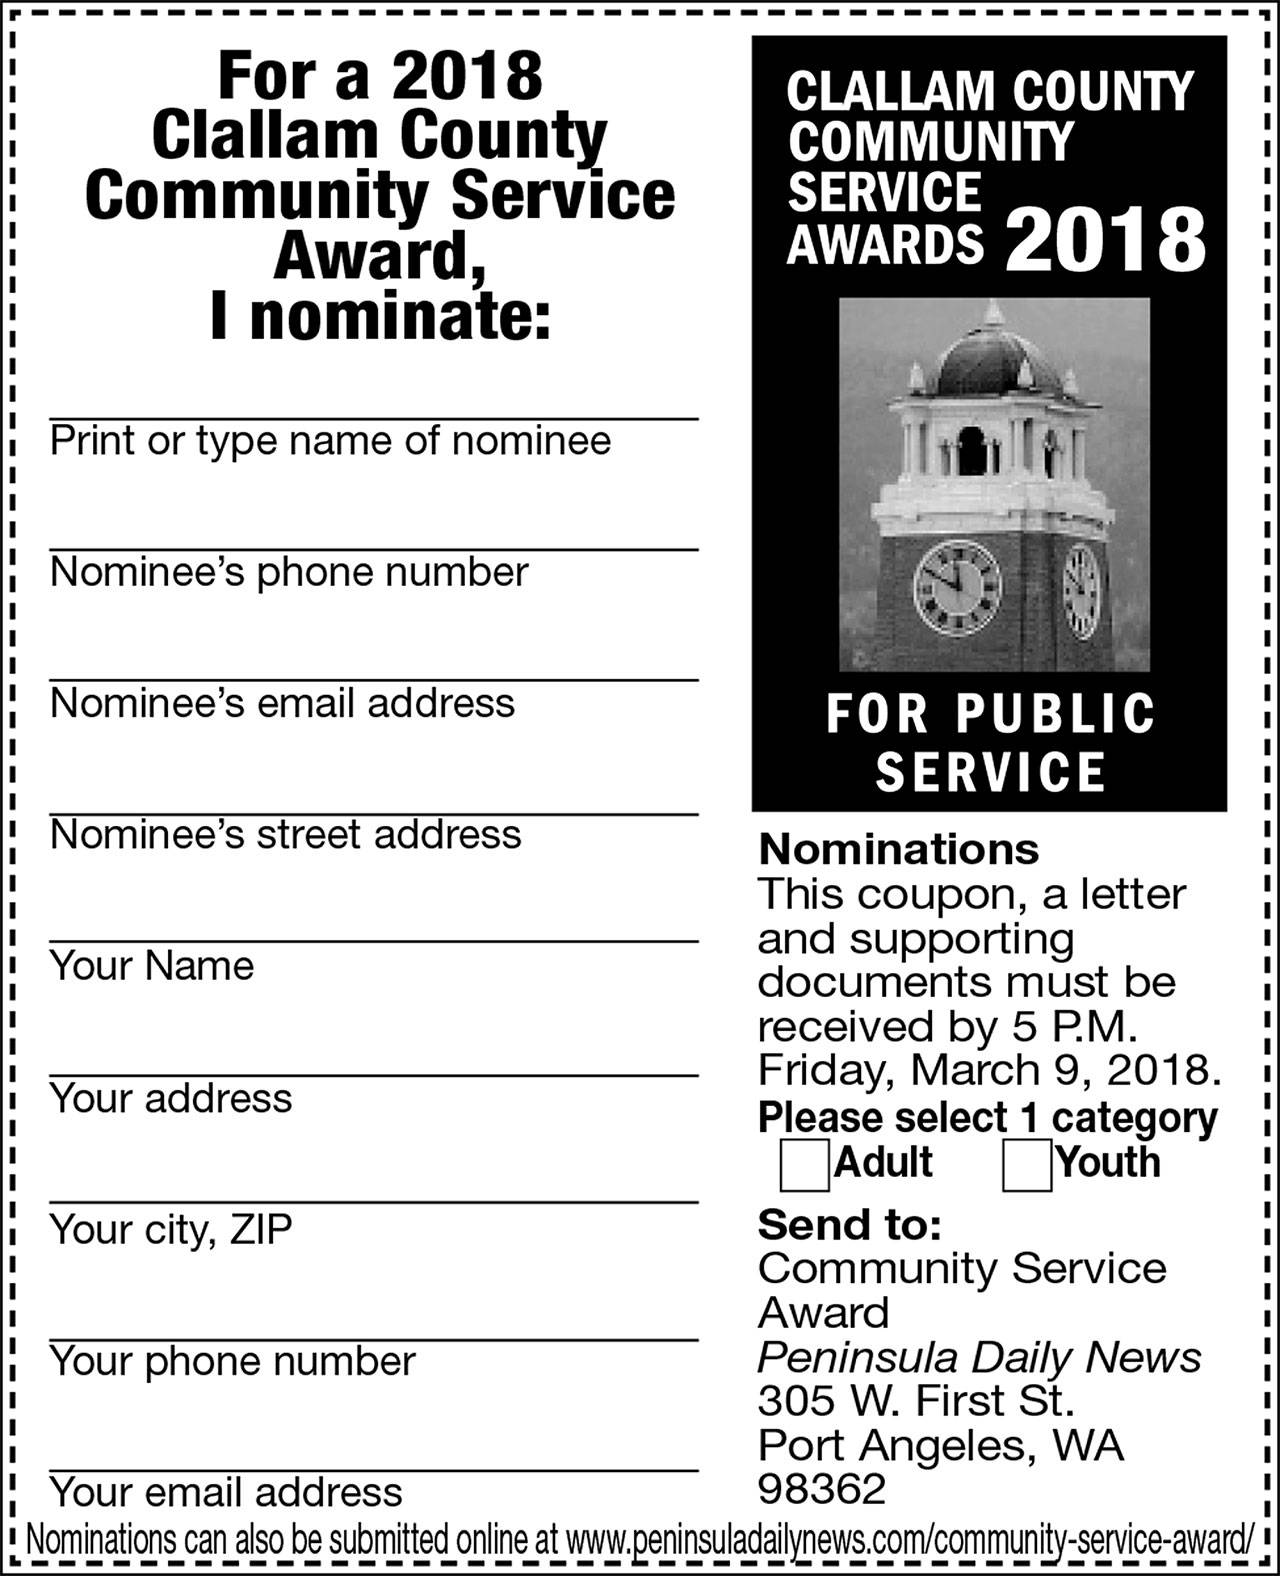 Community Service Award deadline Friday